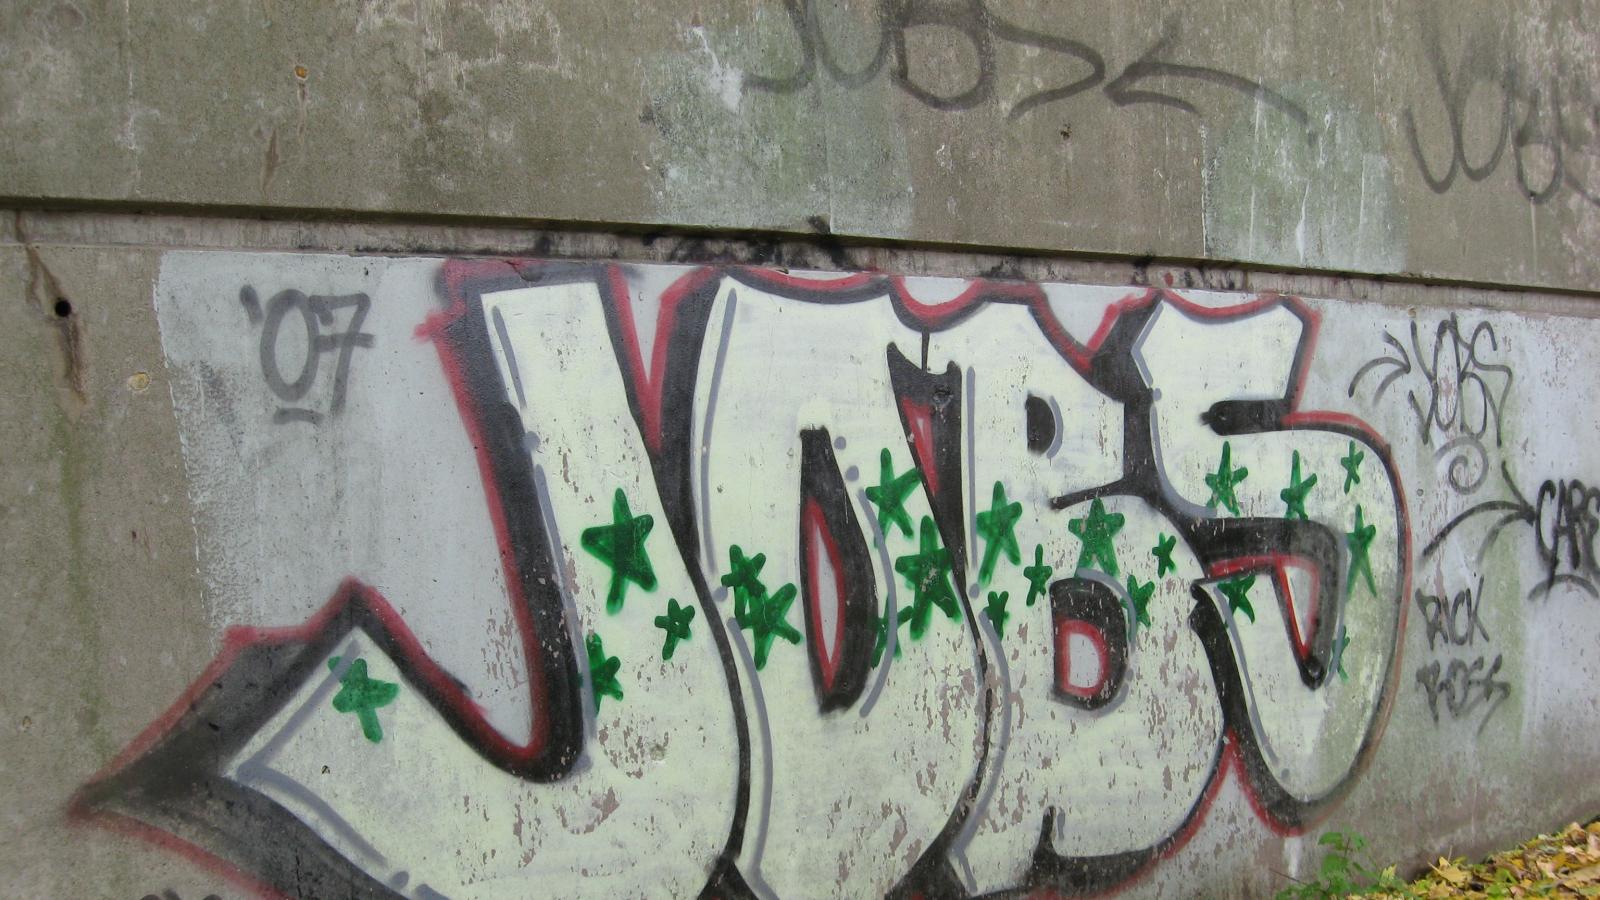 graffiti on a wall that says jobs